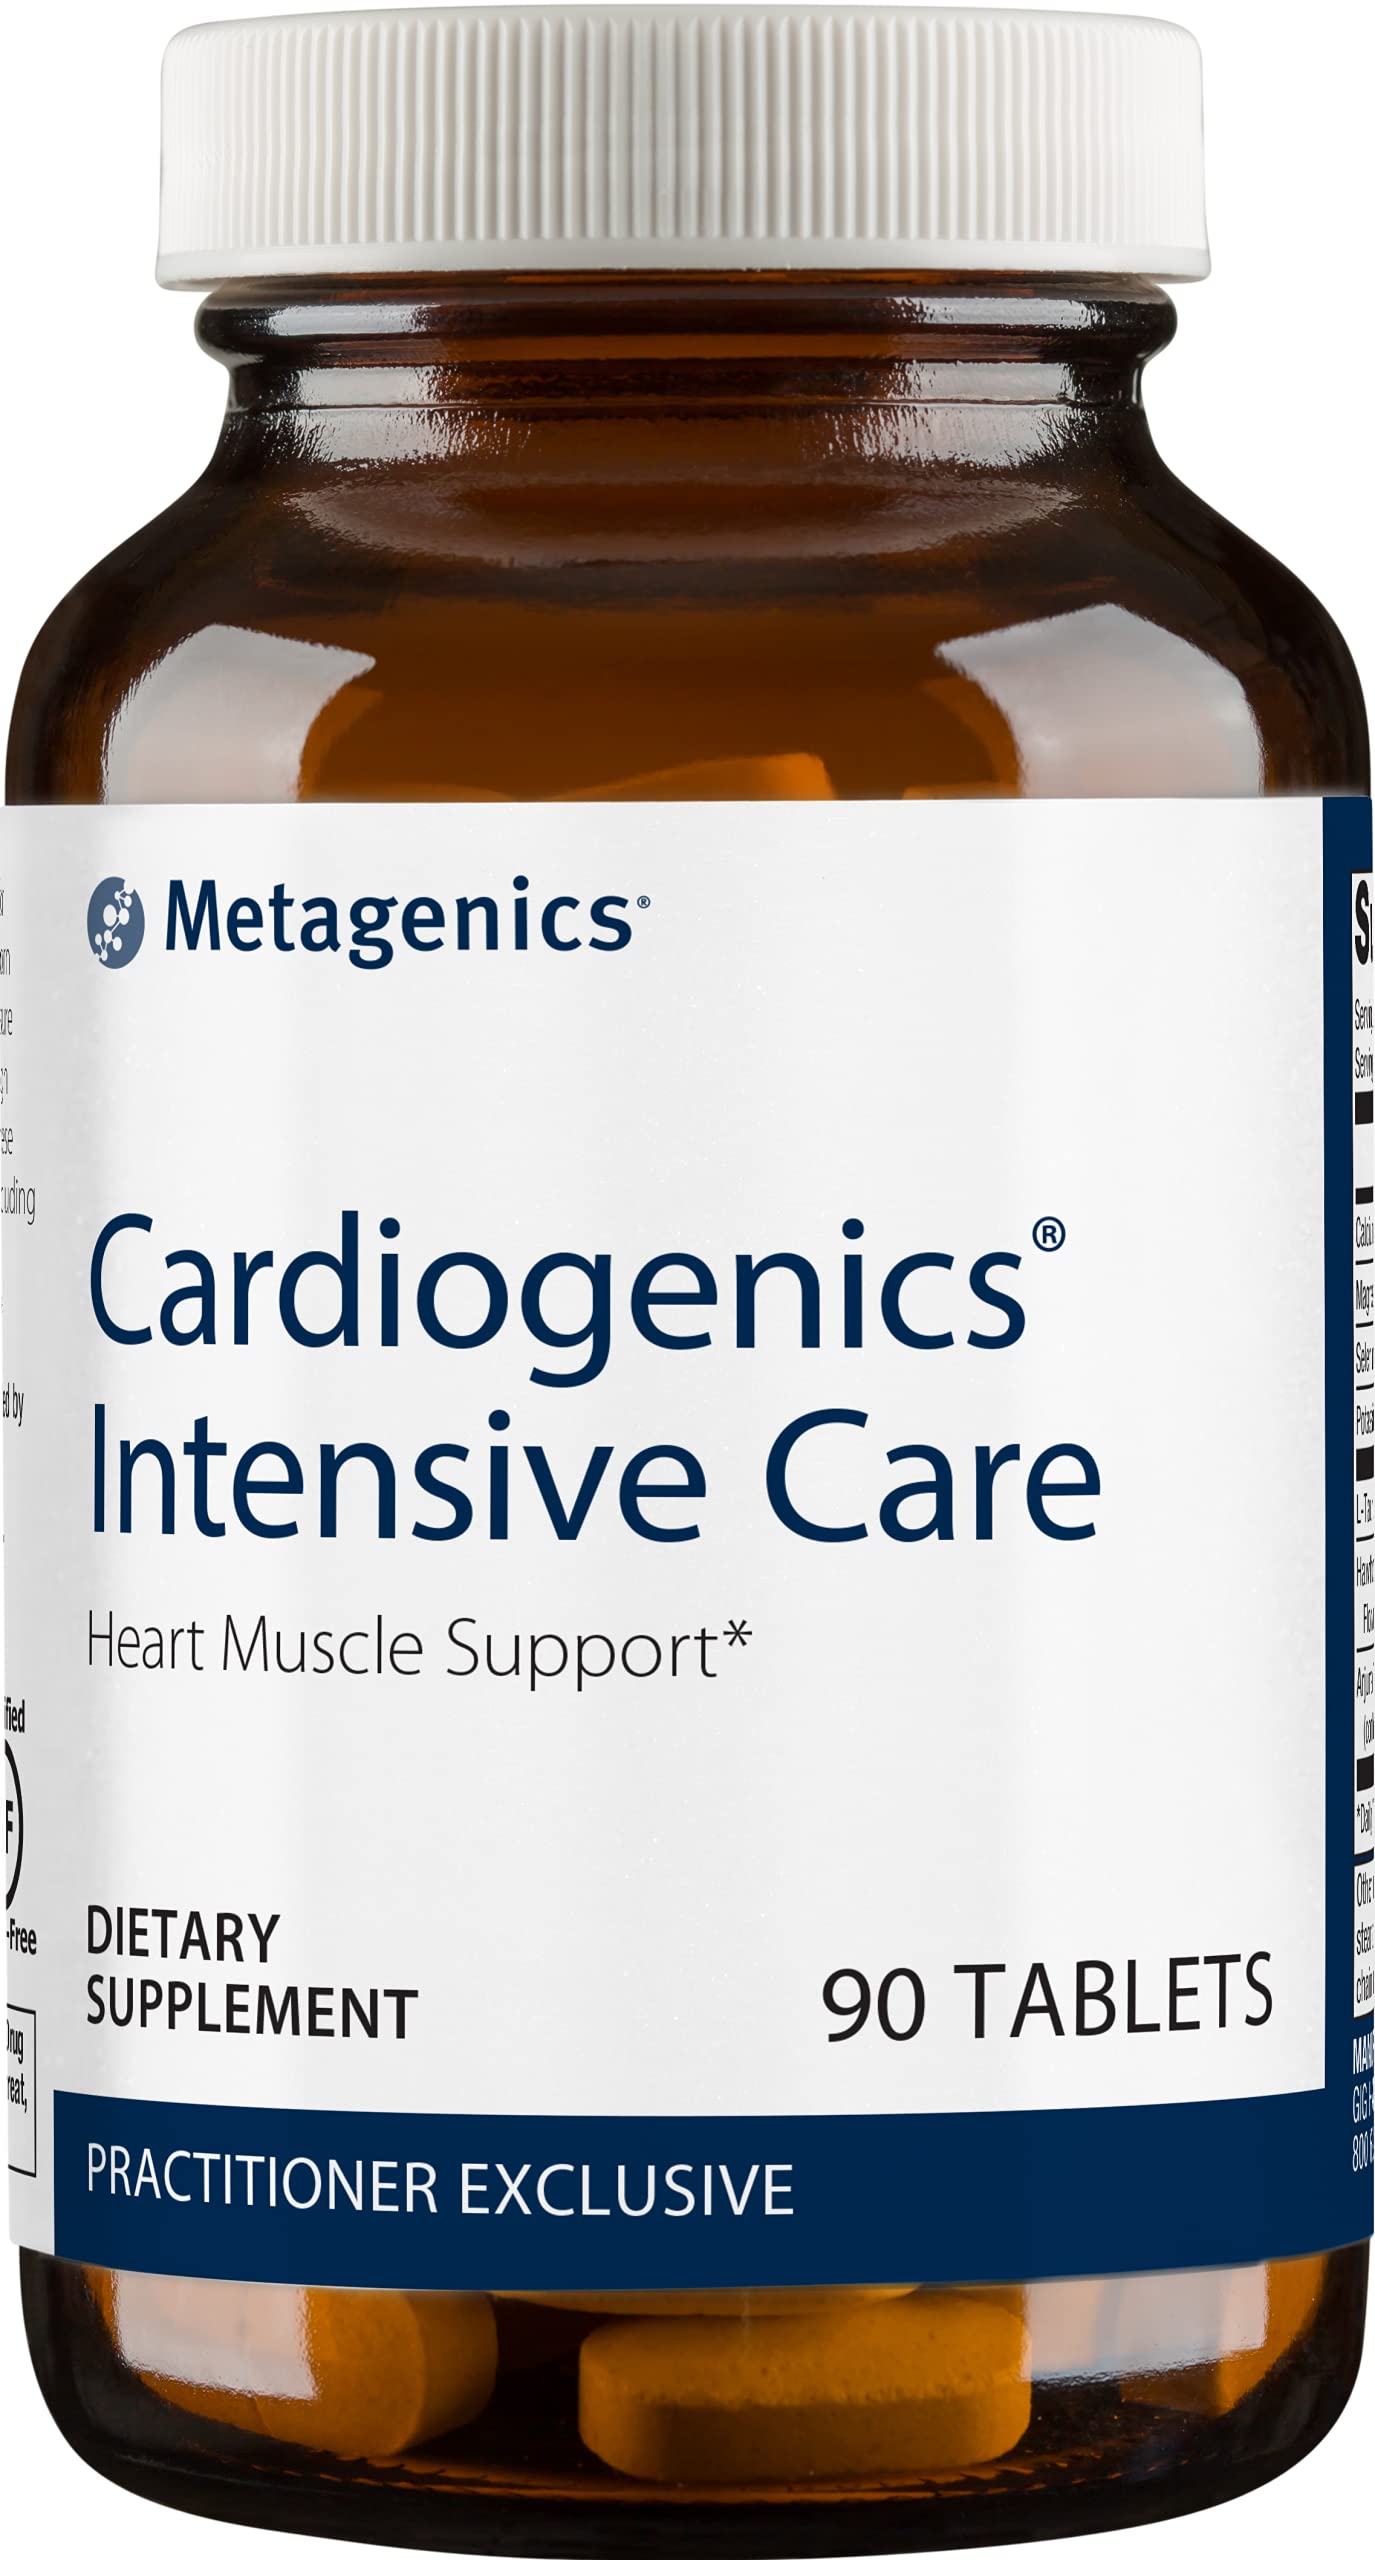 Metagenics - Cardiogenics Intensive Care, 90 Count